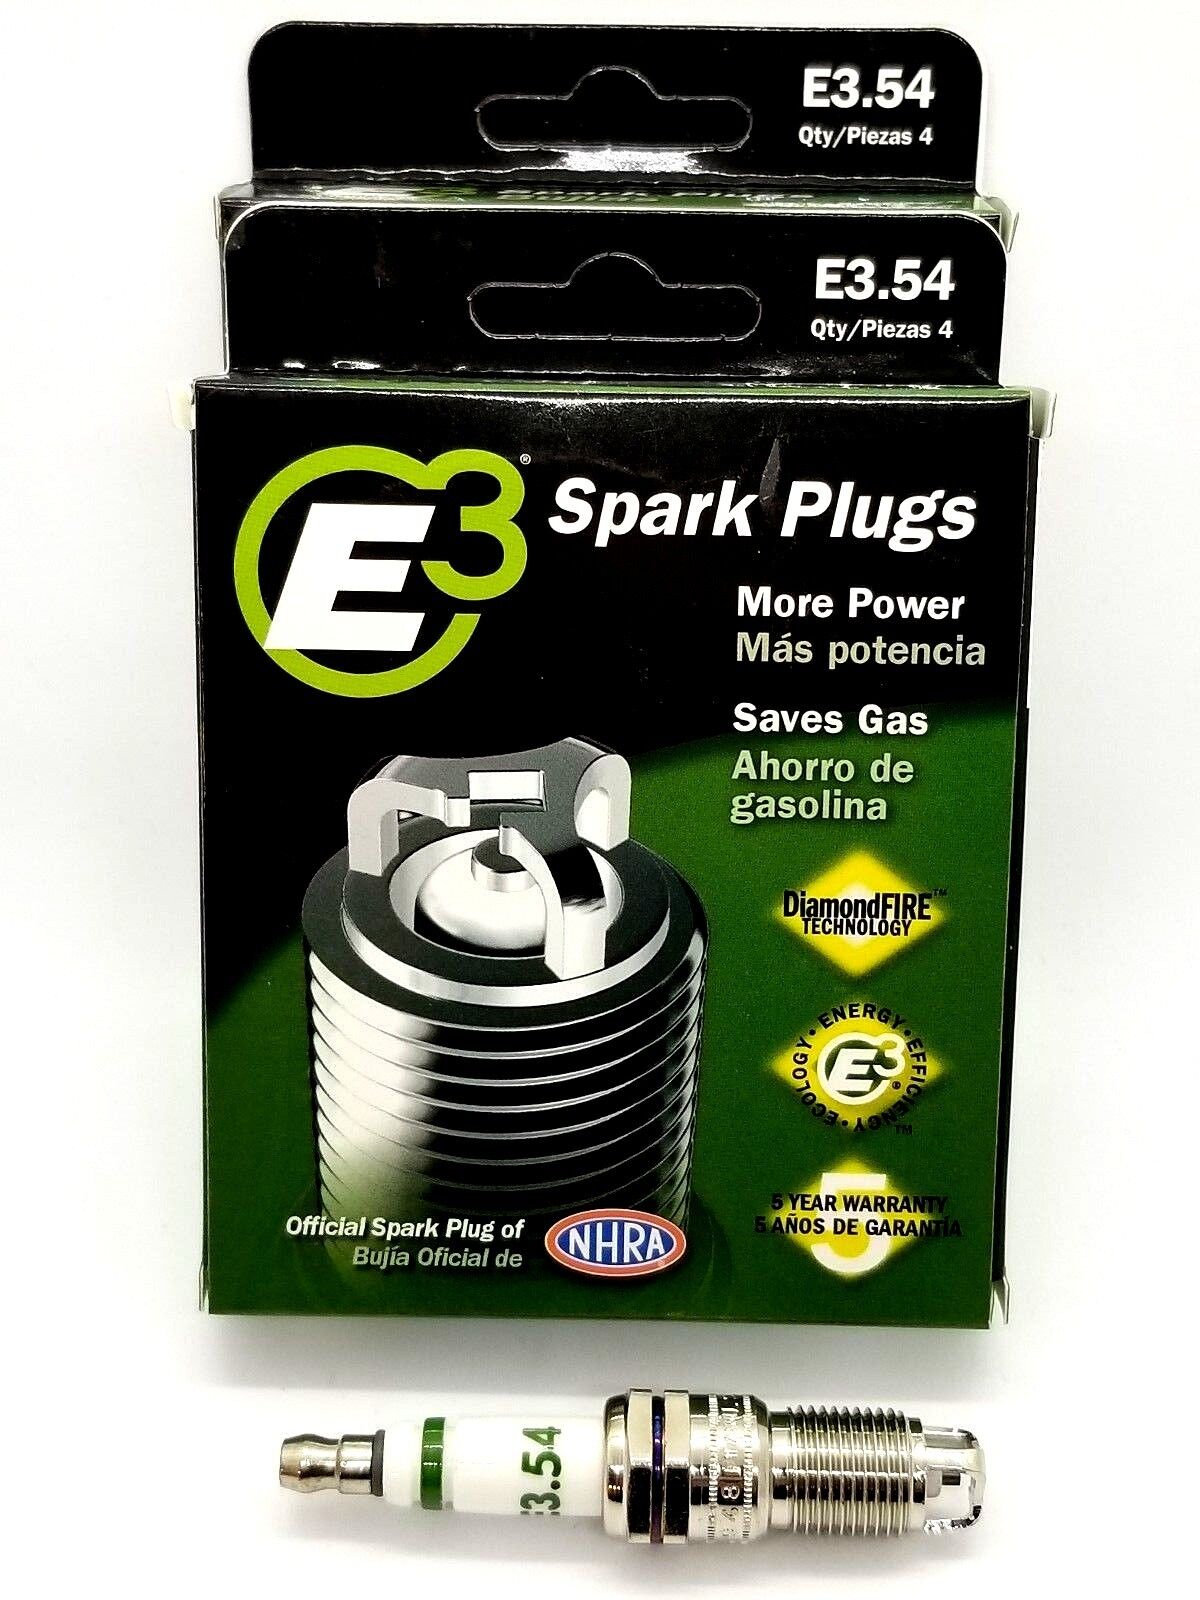 E3.54 Spark Plugs, Cadillac, Hummer, Mercury, Ford,  Spark Plugs Set of 8